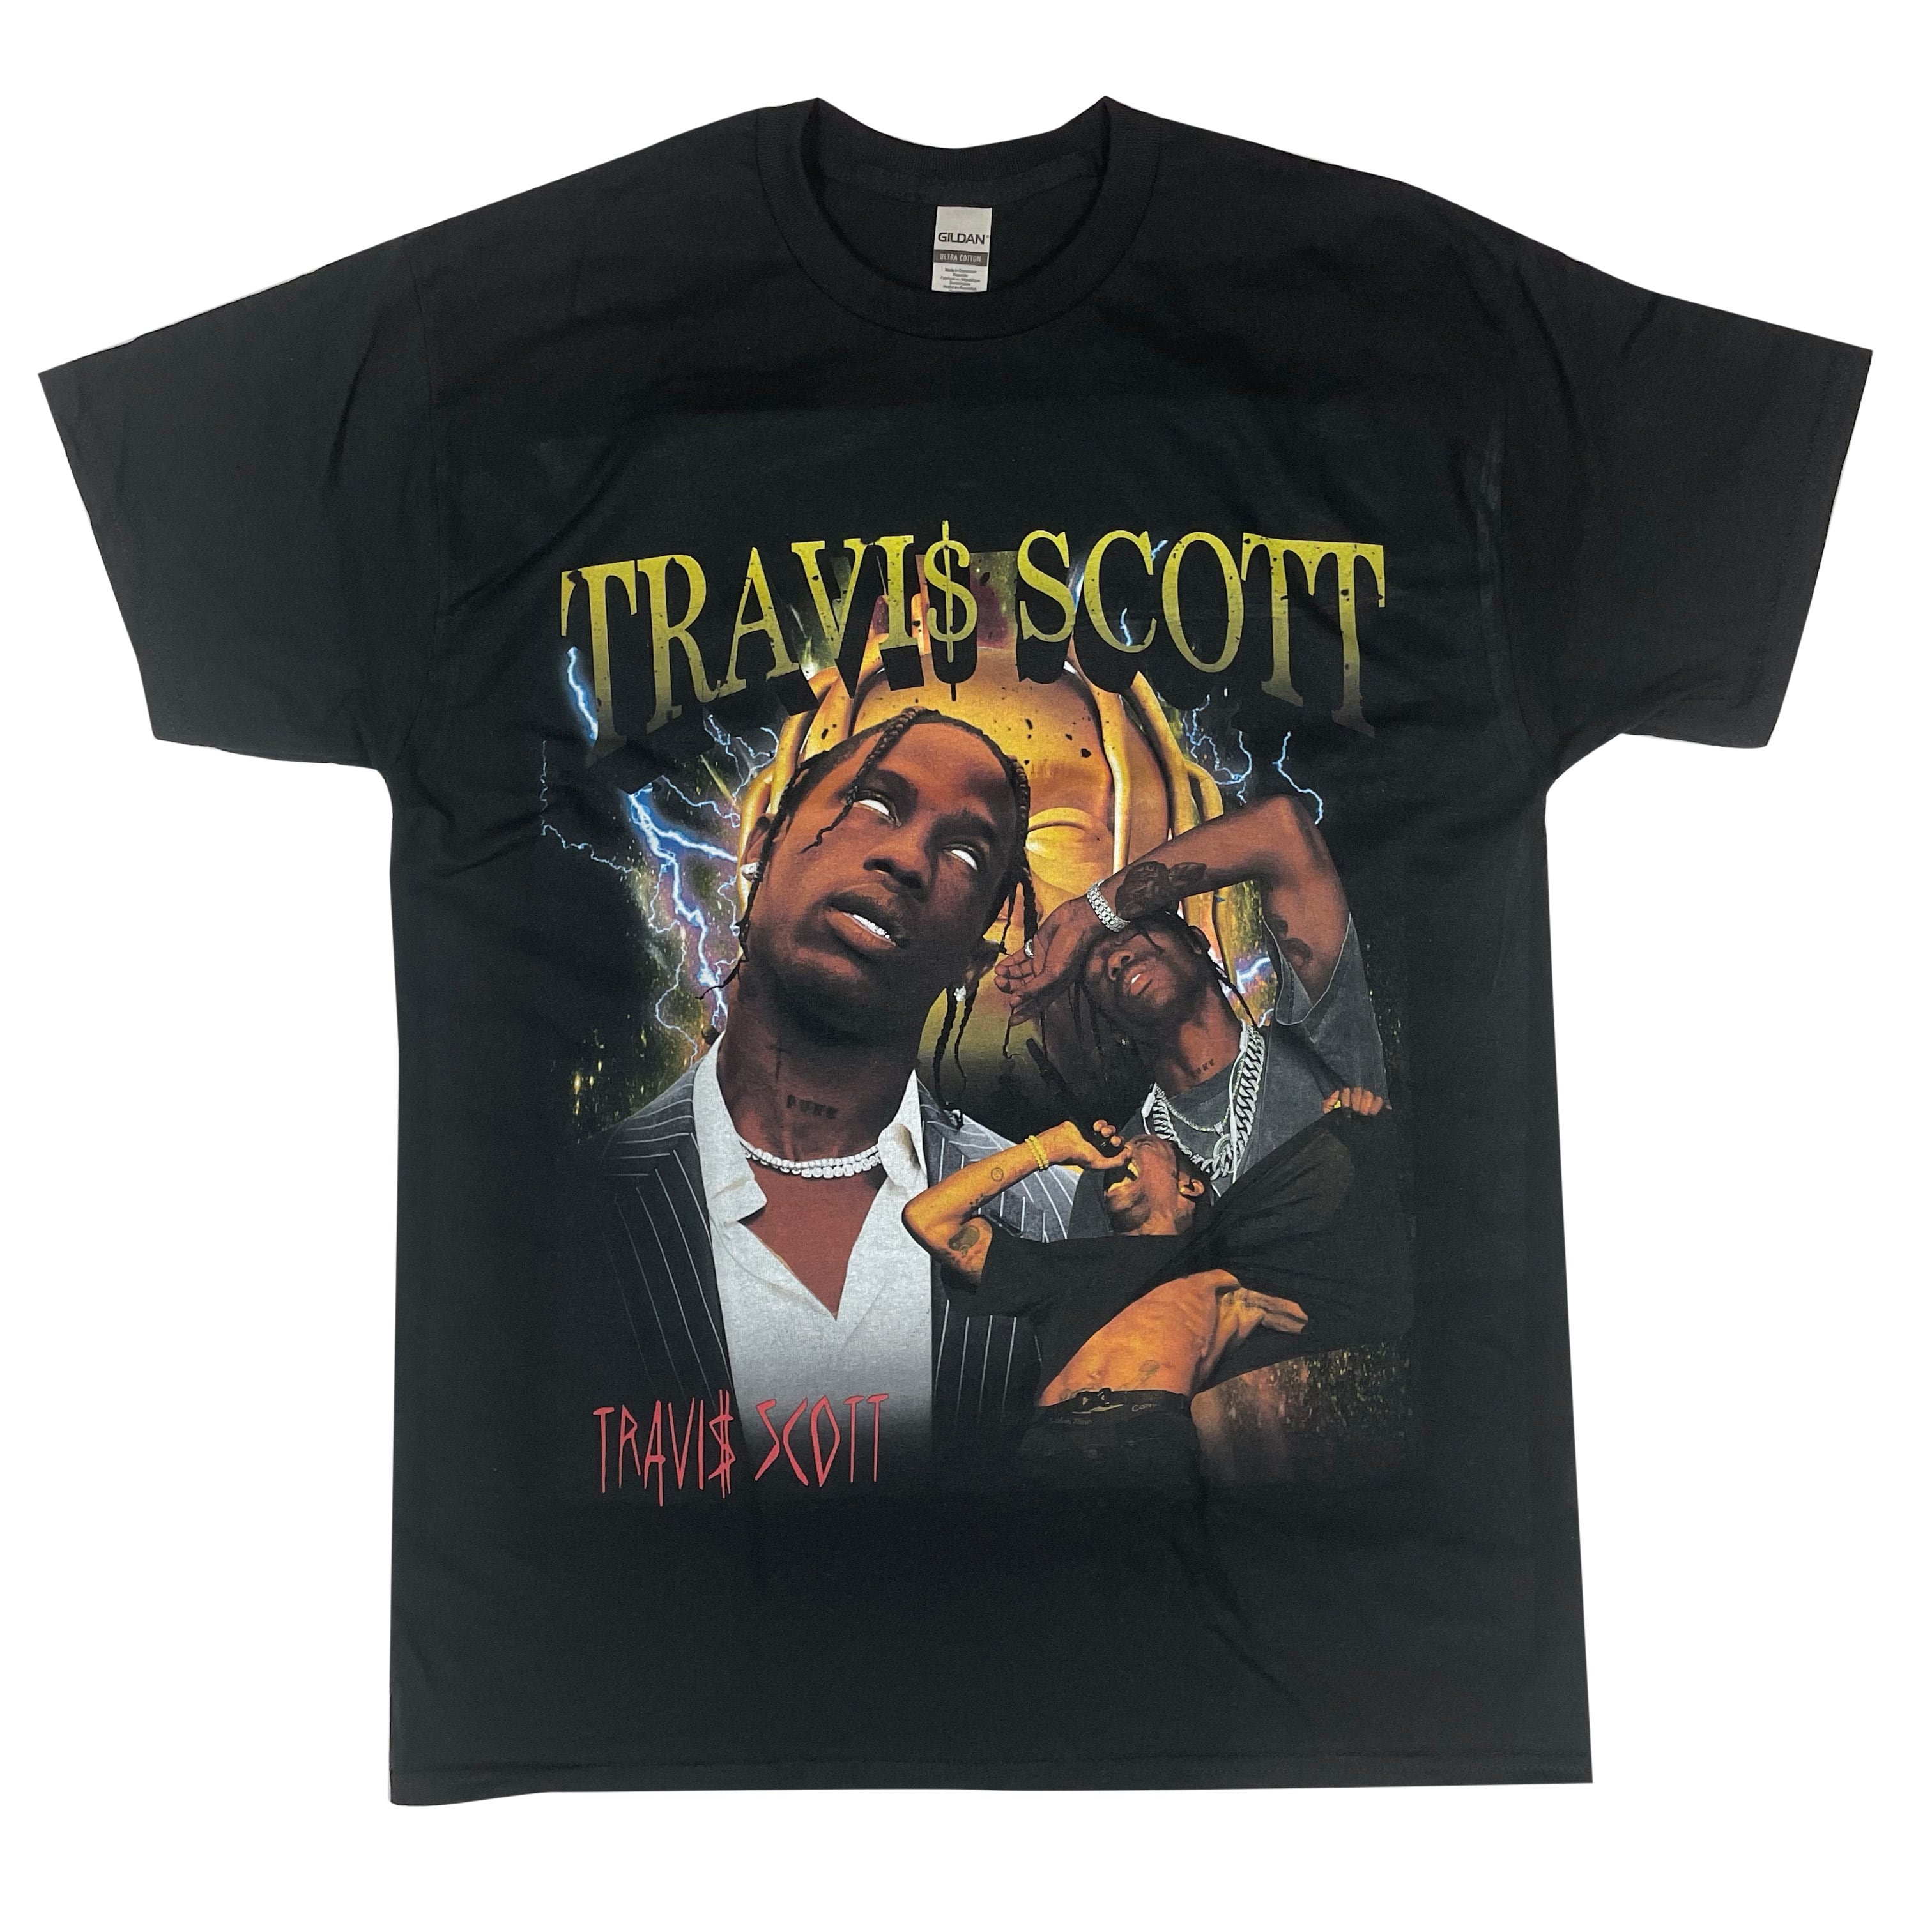 Travis Scott RAPTEE(ブラック) ラップティー トラヴィス・スコット TravisScott